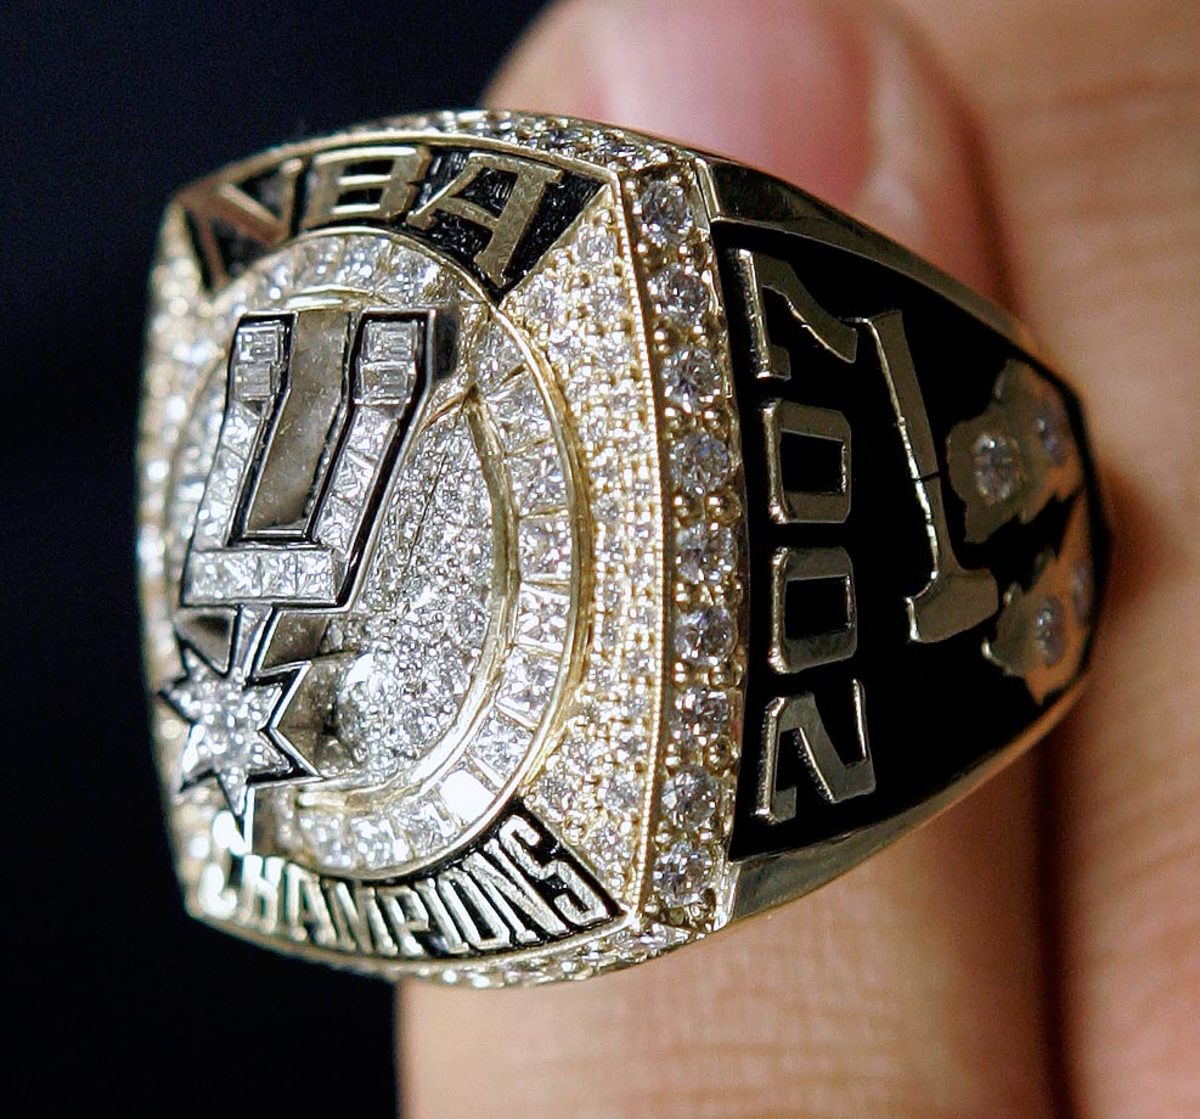 spurs 4 championship rings